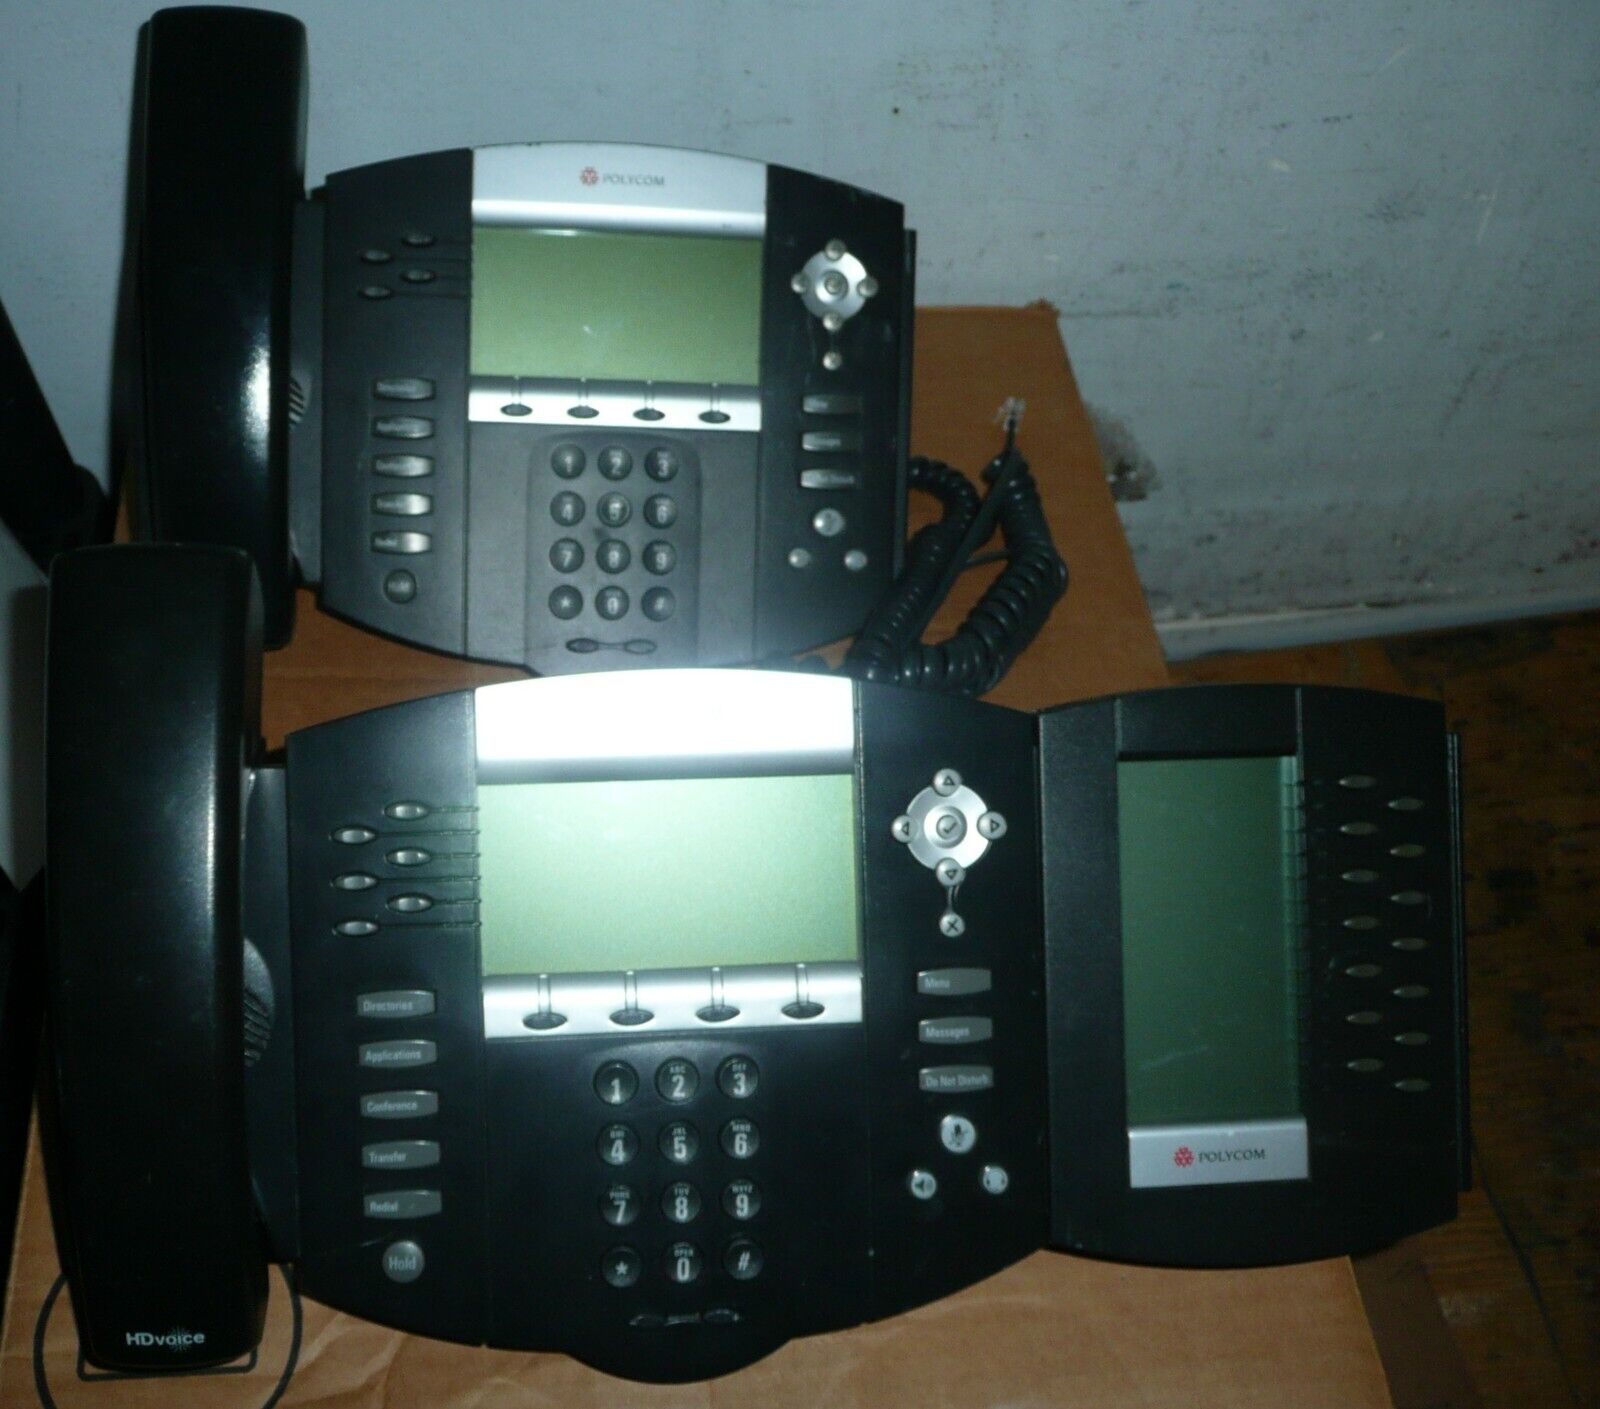 Lot of 2 Polycom Business IP Phones IP550 + IP560 w/ BEM 2201-12630-001 12750